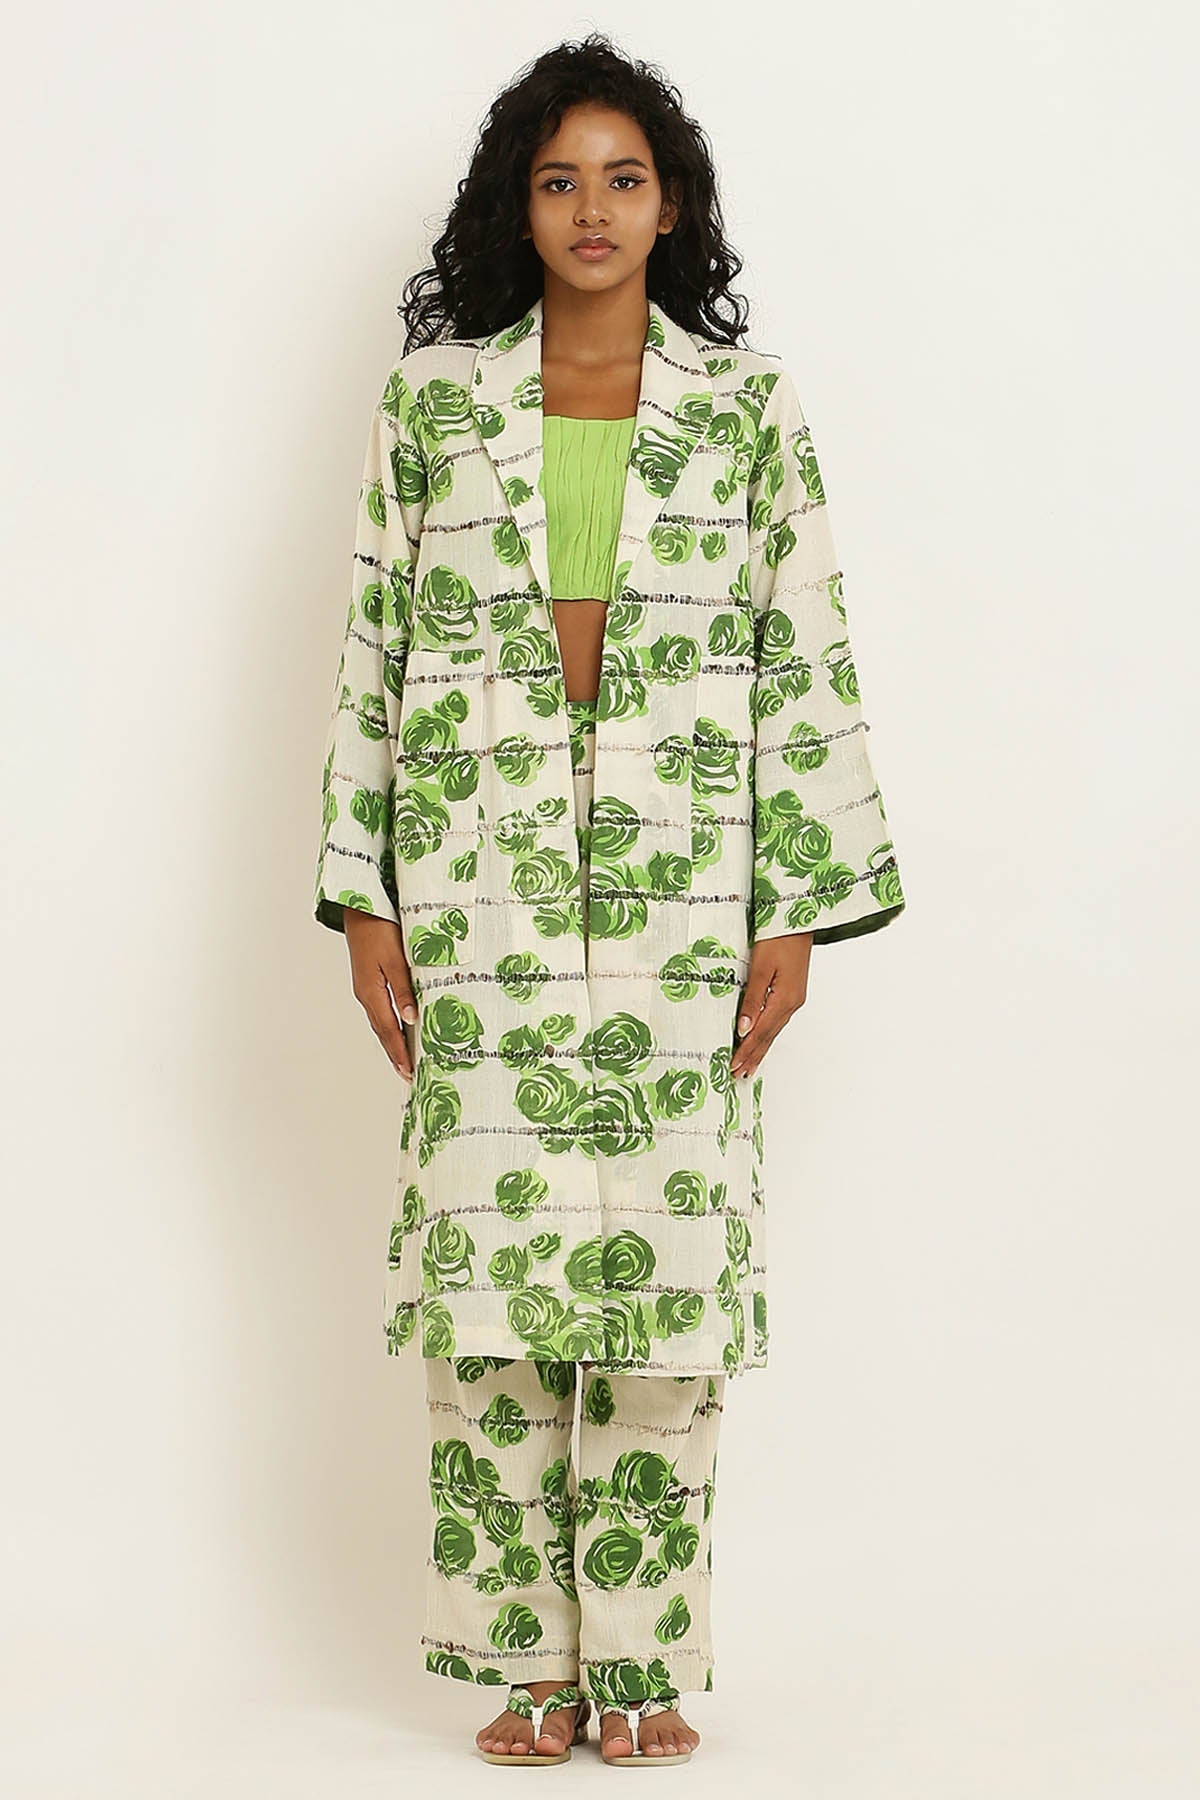 Designer Kusmi Emerald Enchantment: Flowing Green Rose Cape For Women at ScrollnShops